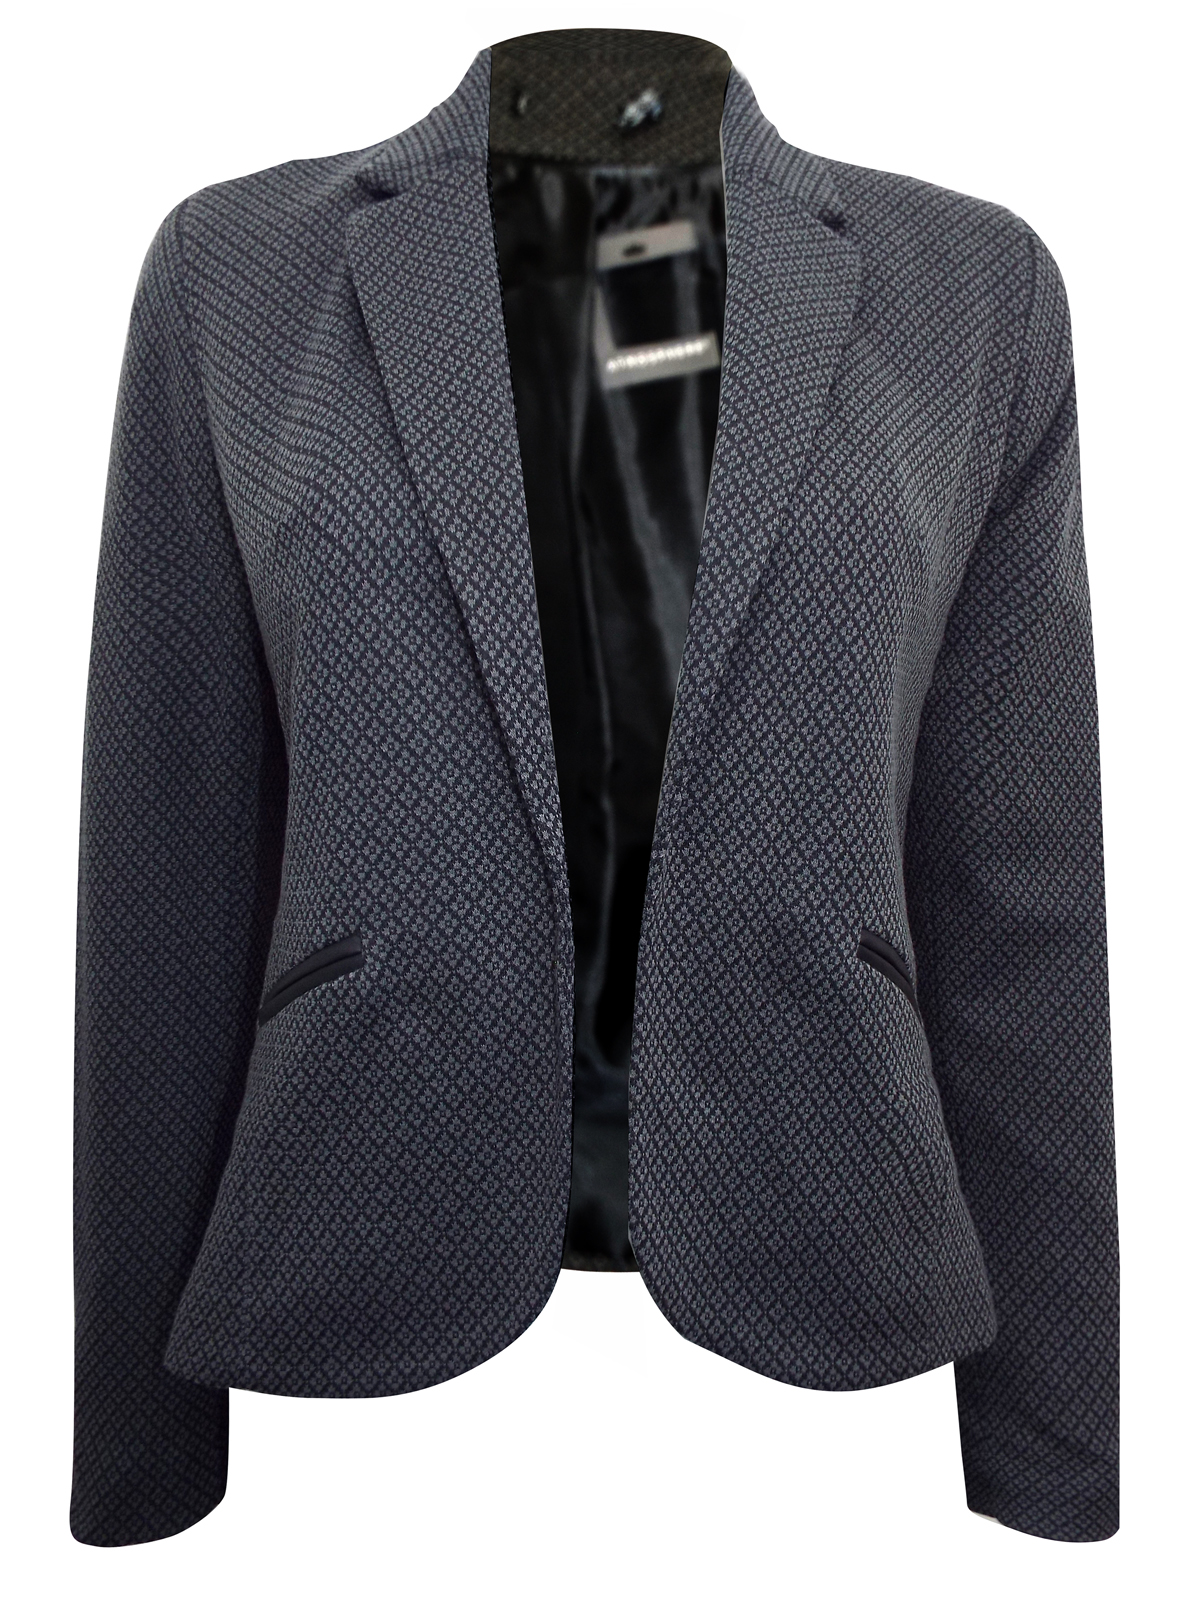 BLACK Printed Open Front Blazer Jacket - Size 6 to 20